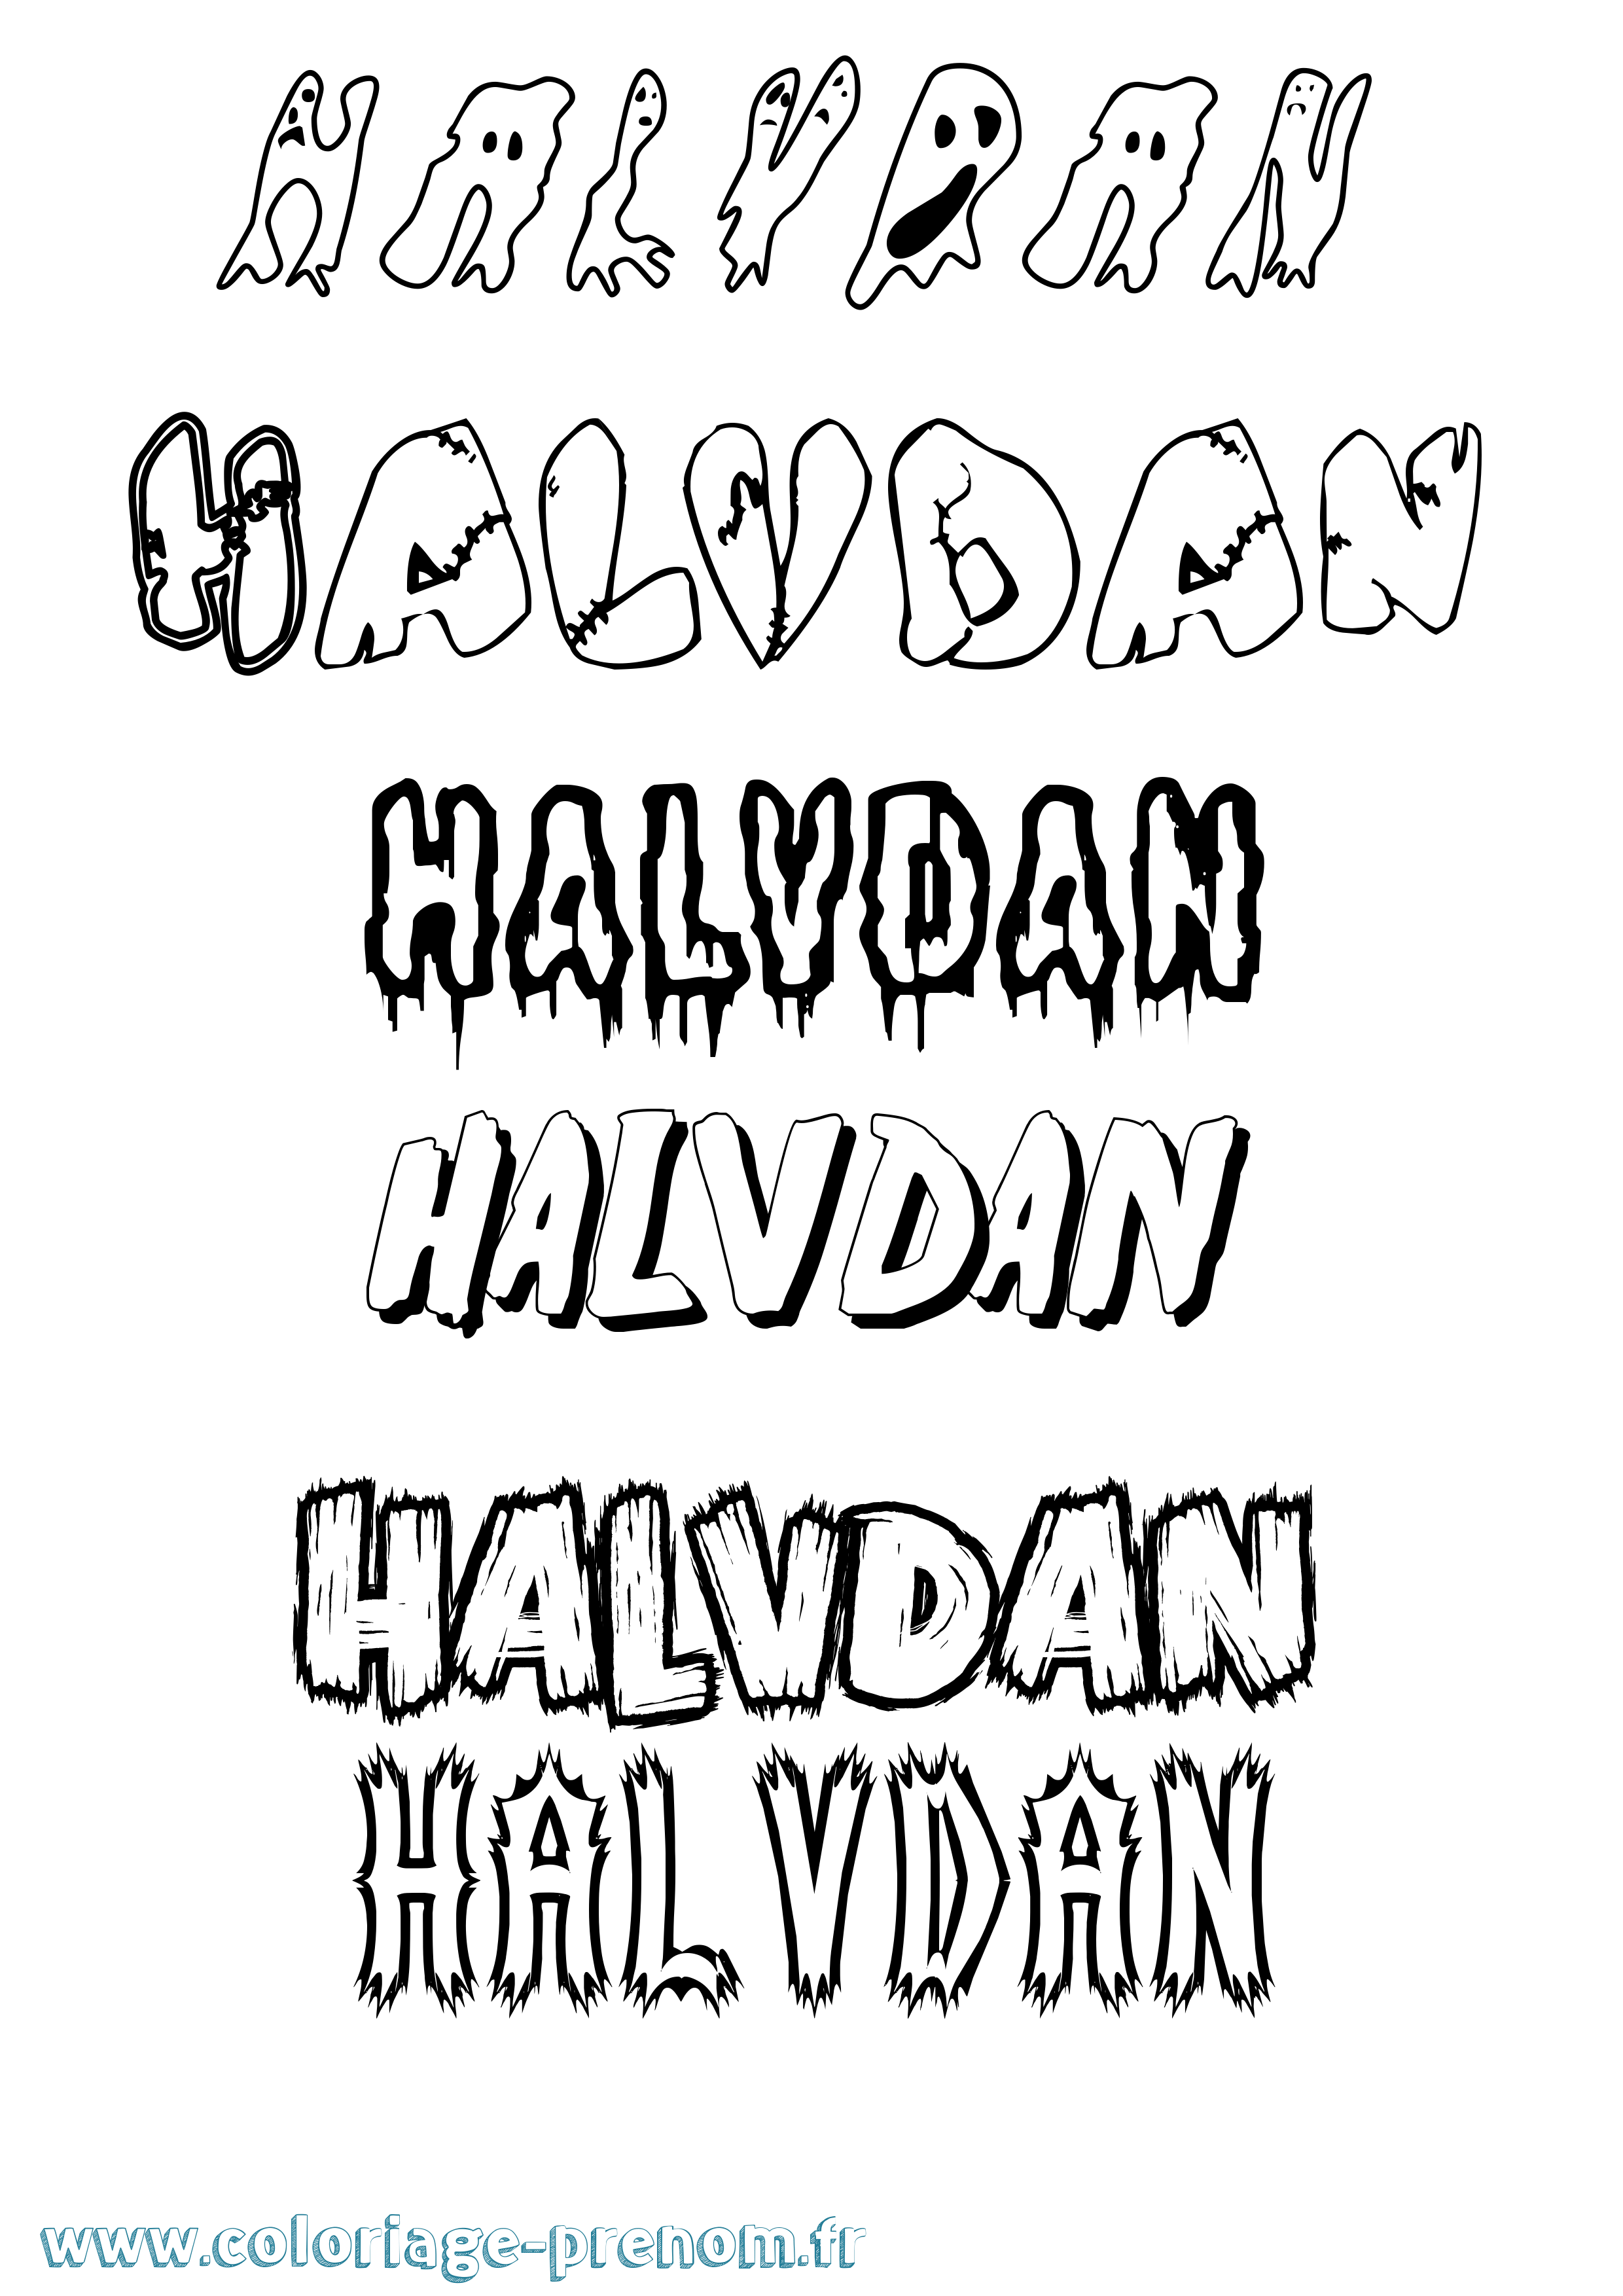 Coloriage prénom Halvdan Frisson